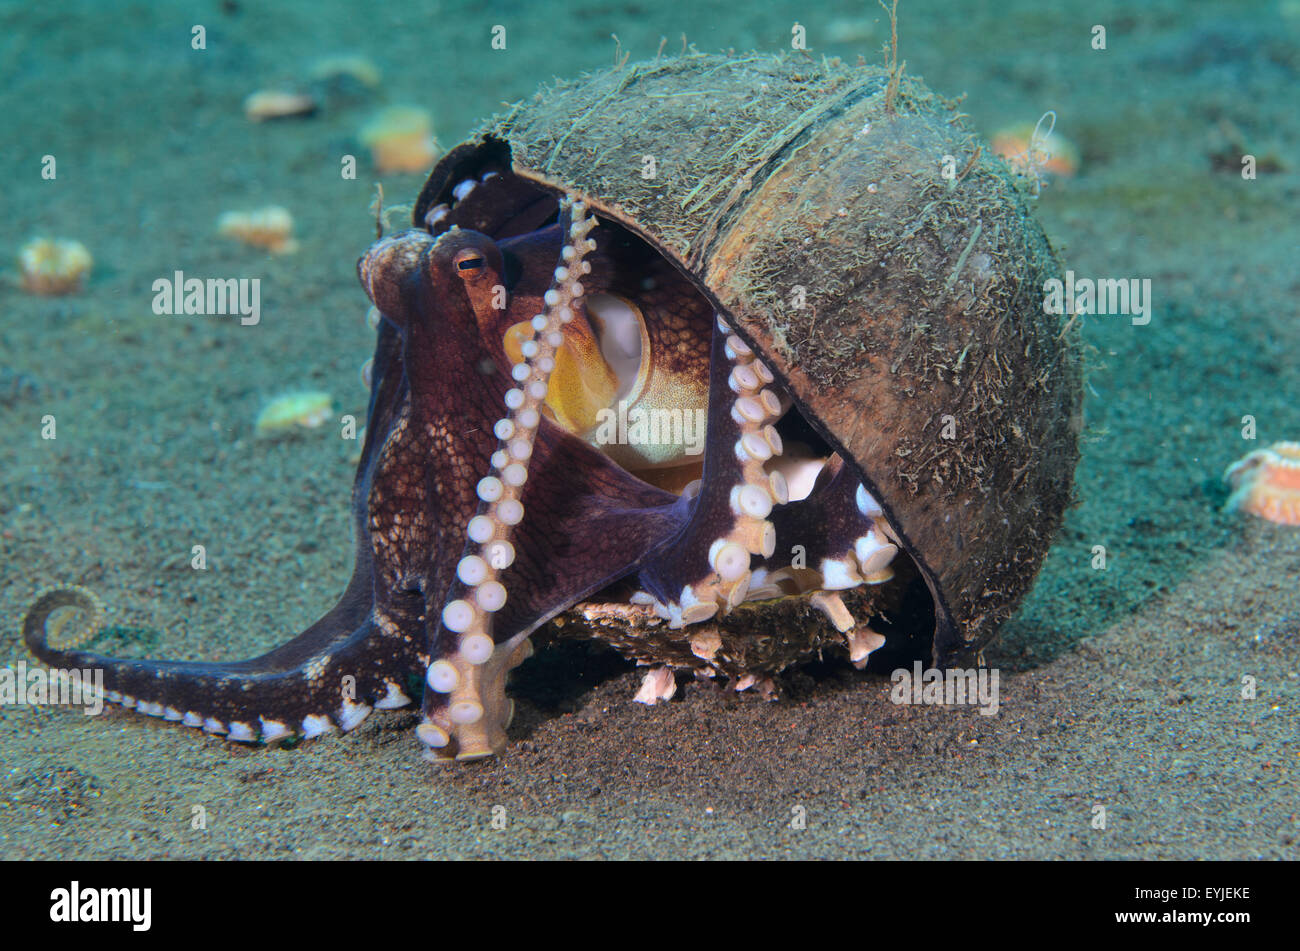 A coconut octopus, Amphioctopus marginatus, hanging onto its coconut shell home, Puri Jati, Seririt, North Bali, Indonesia Stock Photo